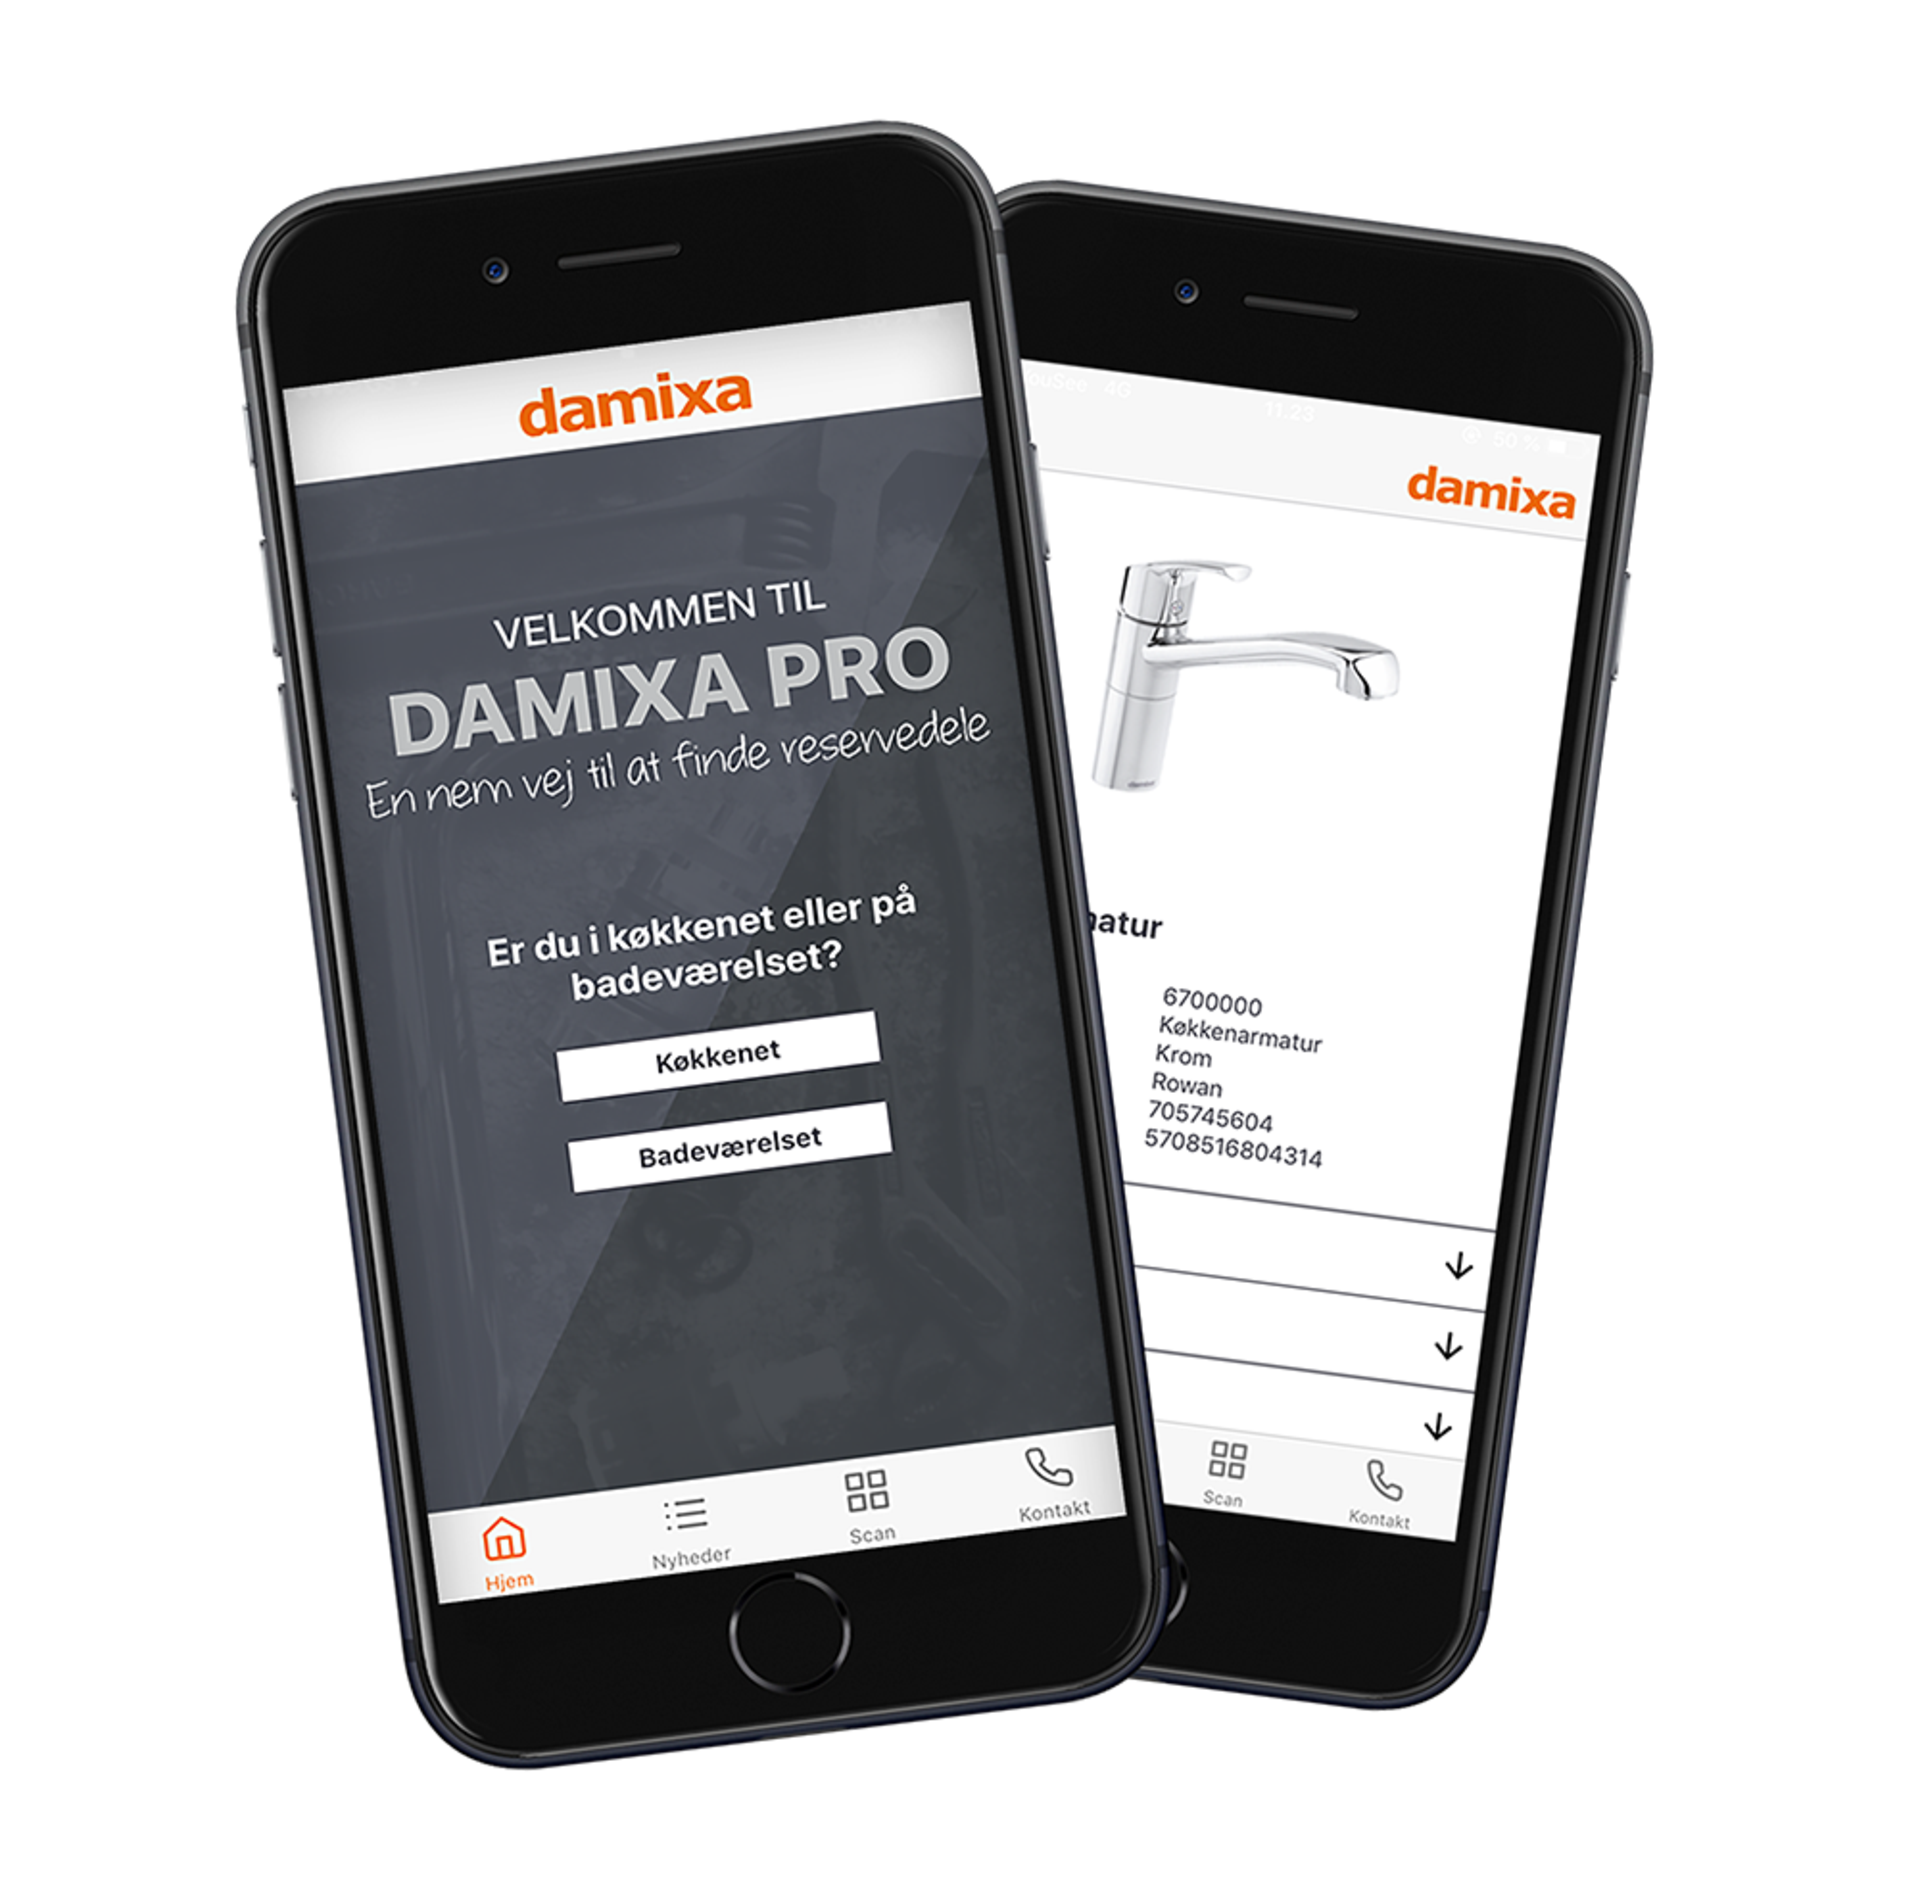 Damixa Pro app